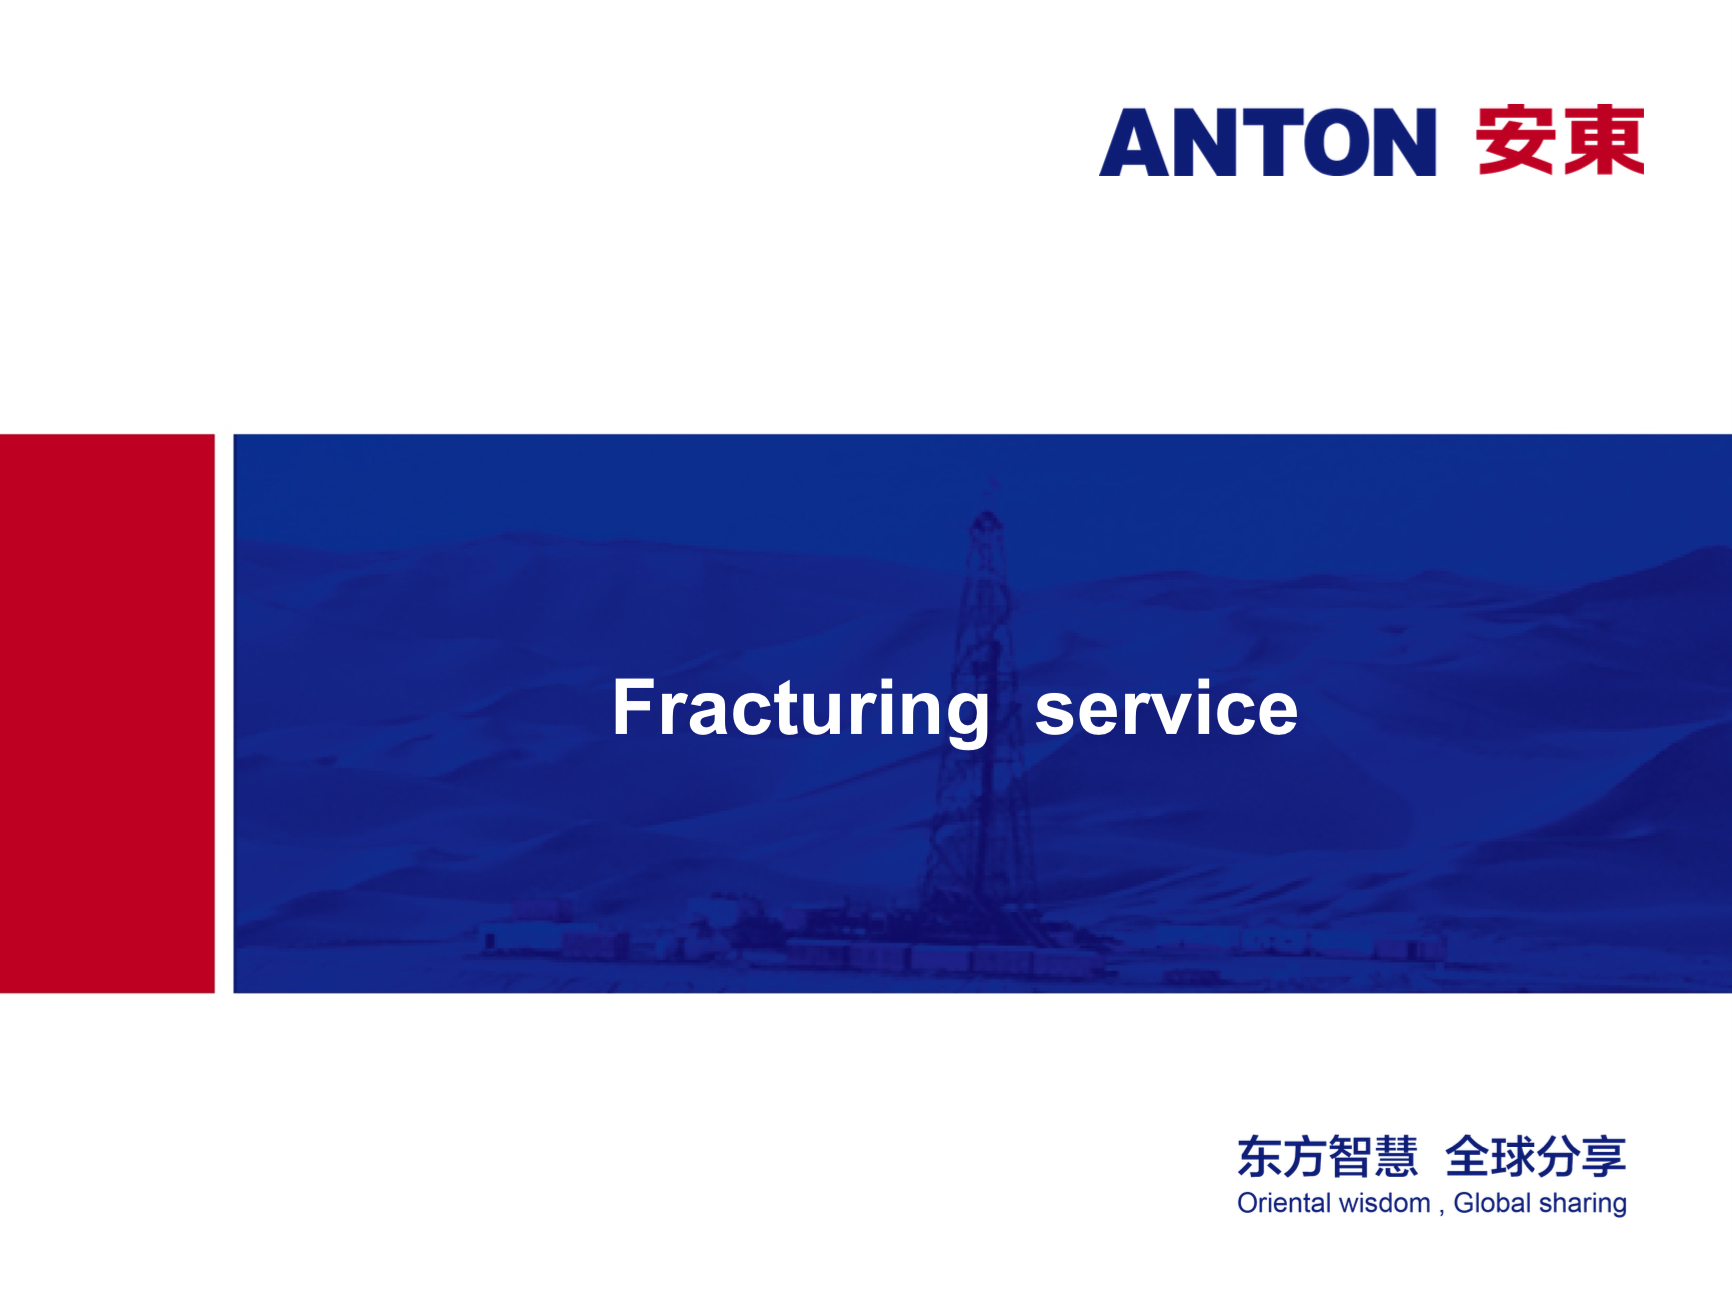 Anton Fracturing Pumping Service Leaflet